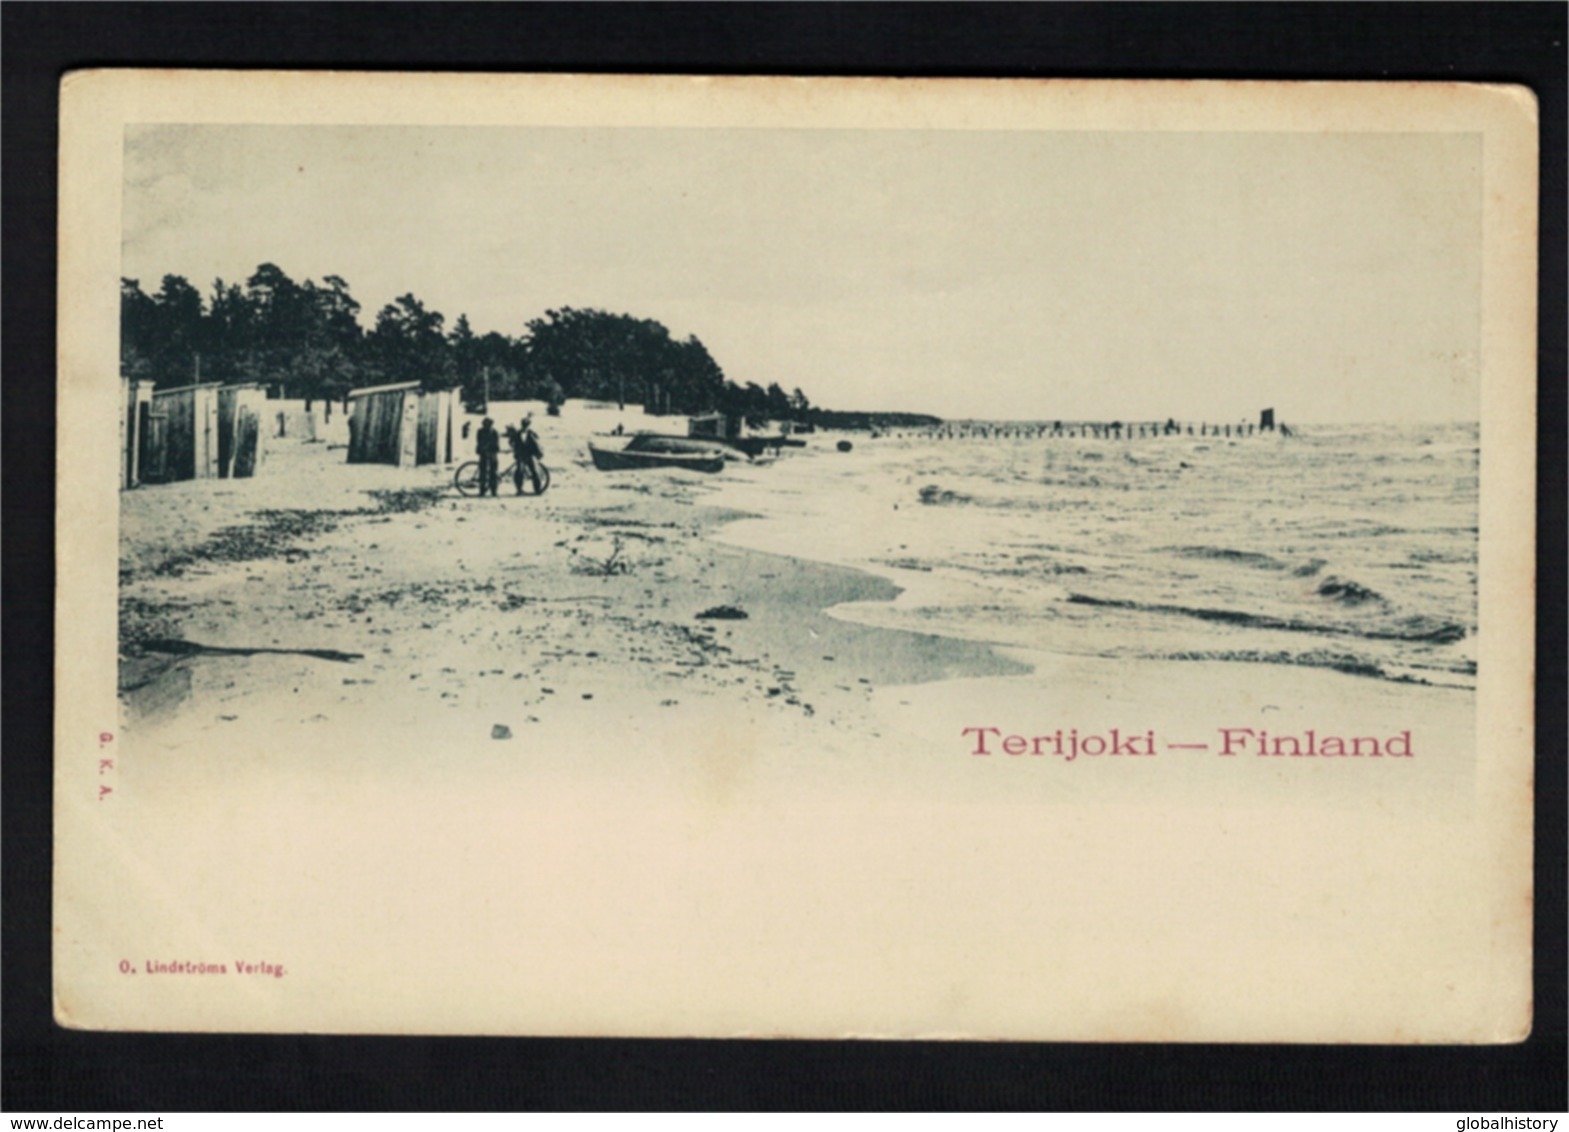 DE1248 - FINLAND - TERIJOKI - VIEW ON THE BEACH AND WOODEN CABINS - Finlande